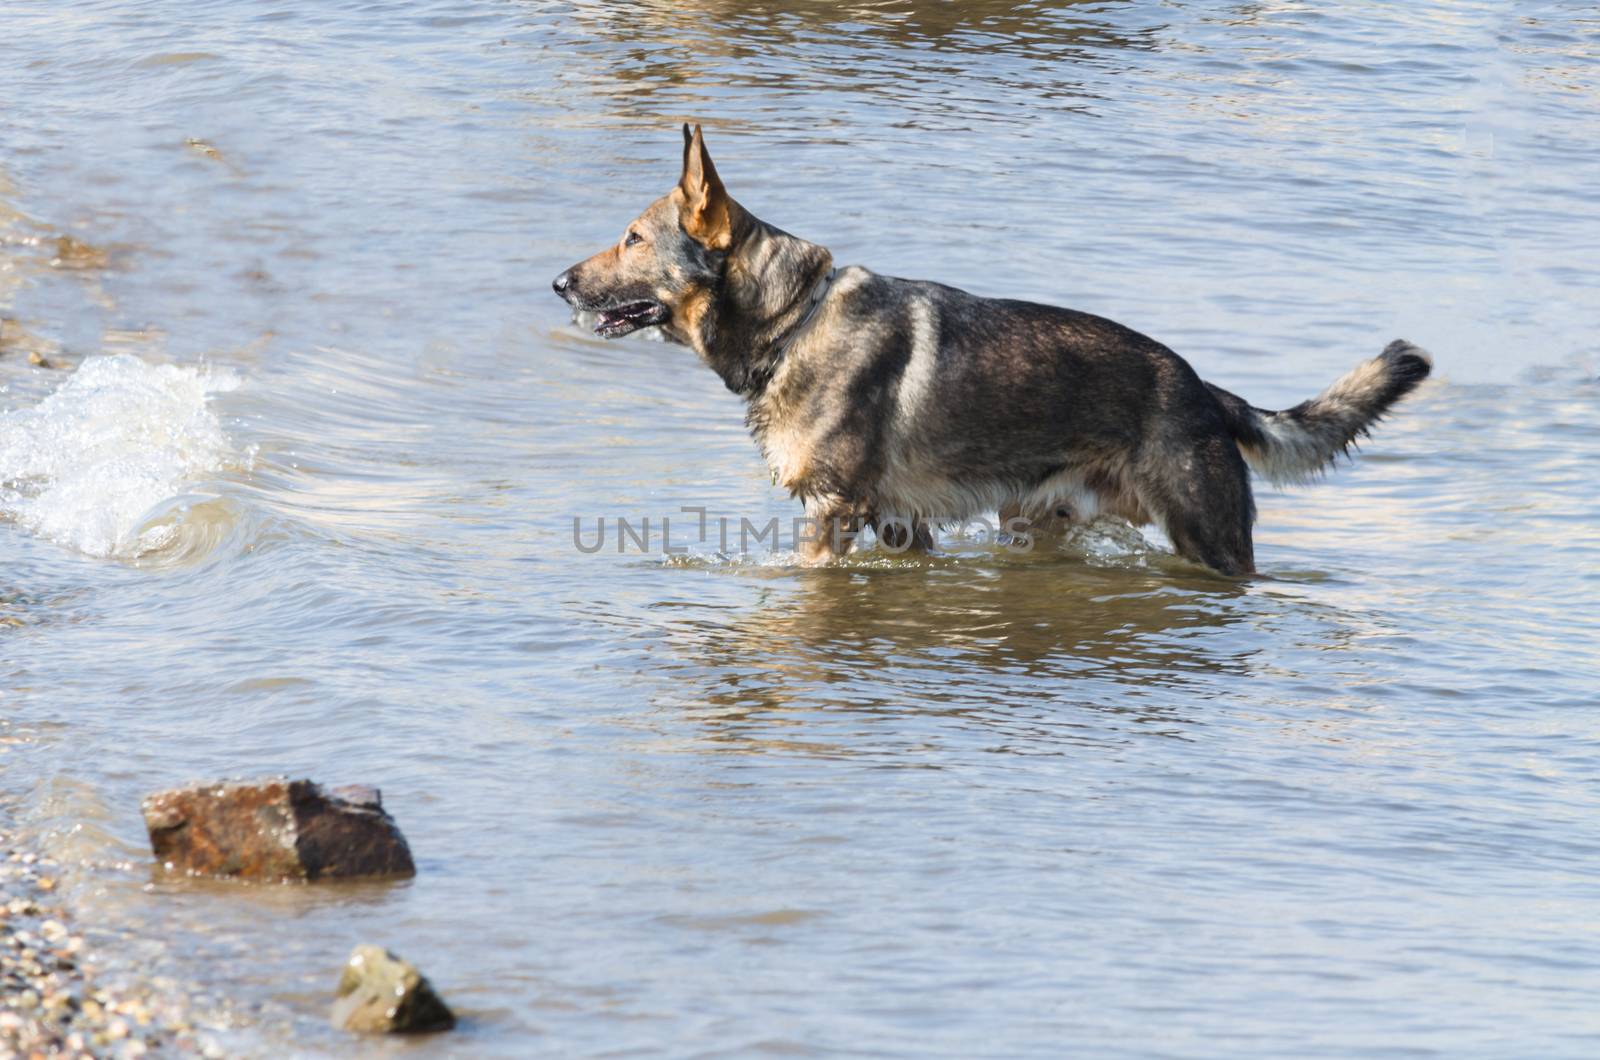 German Shepherd outdoors enjoying the water